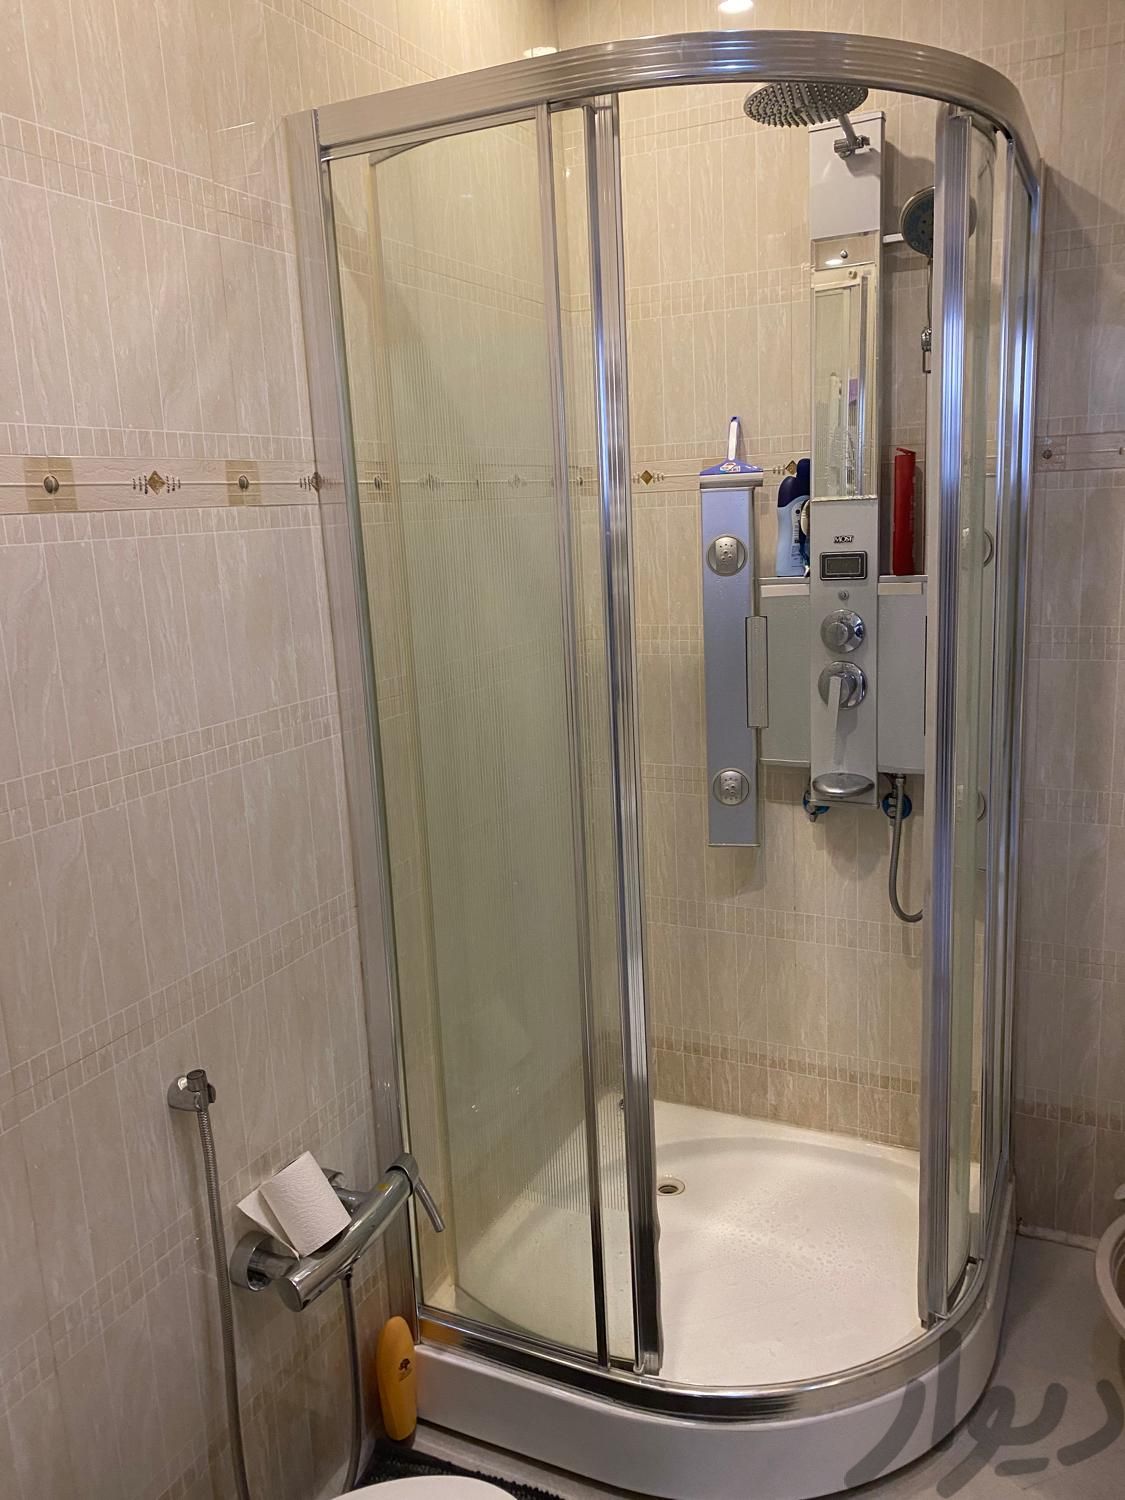 کابین حمام|لوازم حمام|تهران, جردن|دیوار